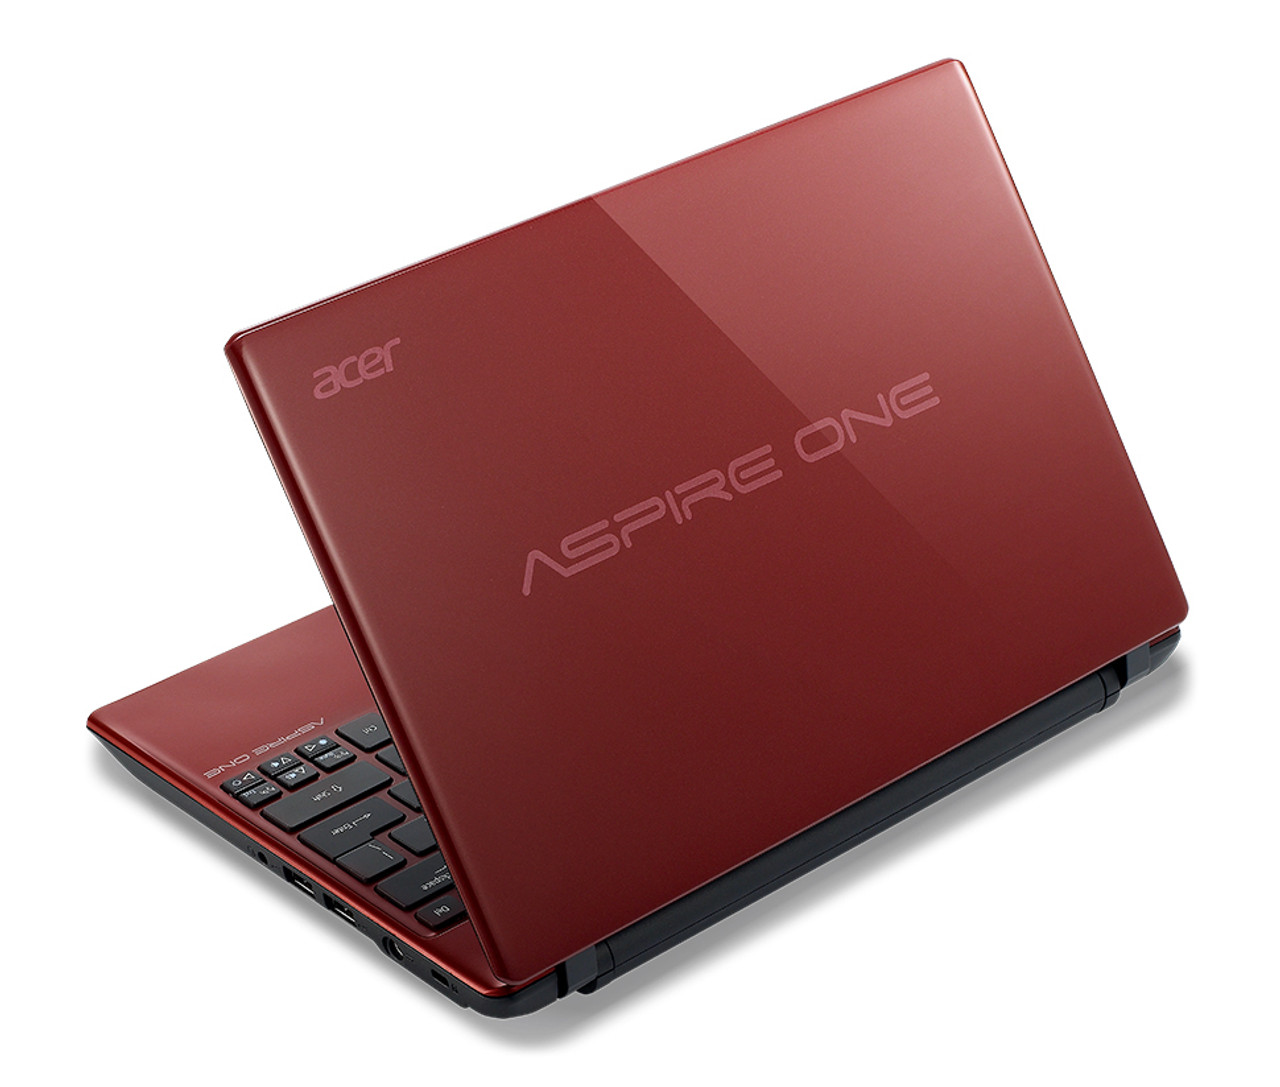 Acer aspire one купить. Acer Aspire one ao756. Acer Aspire one 756. Нетбук Acer Aspire one красный. Acer Aspire one ao756-877b8.